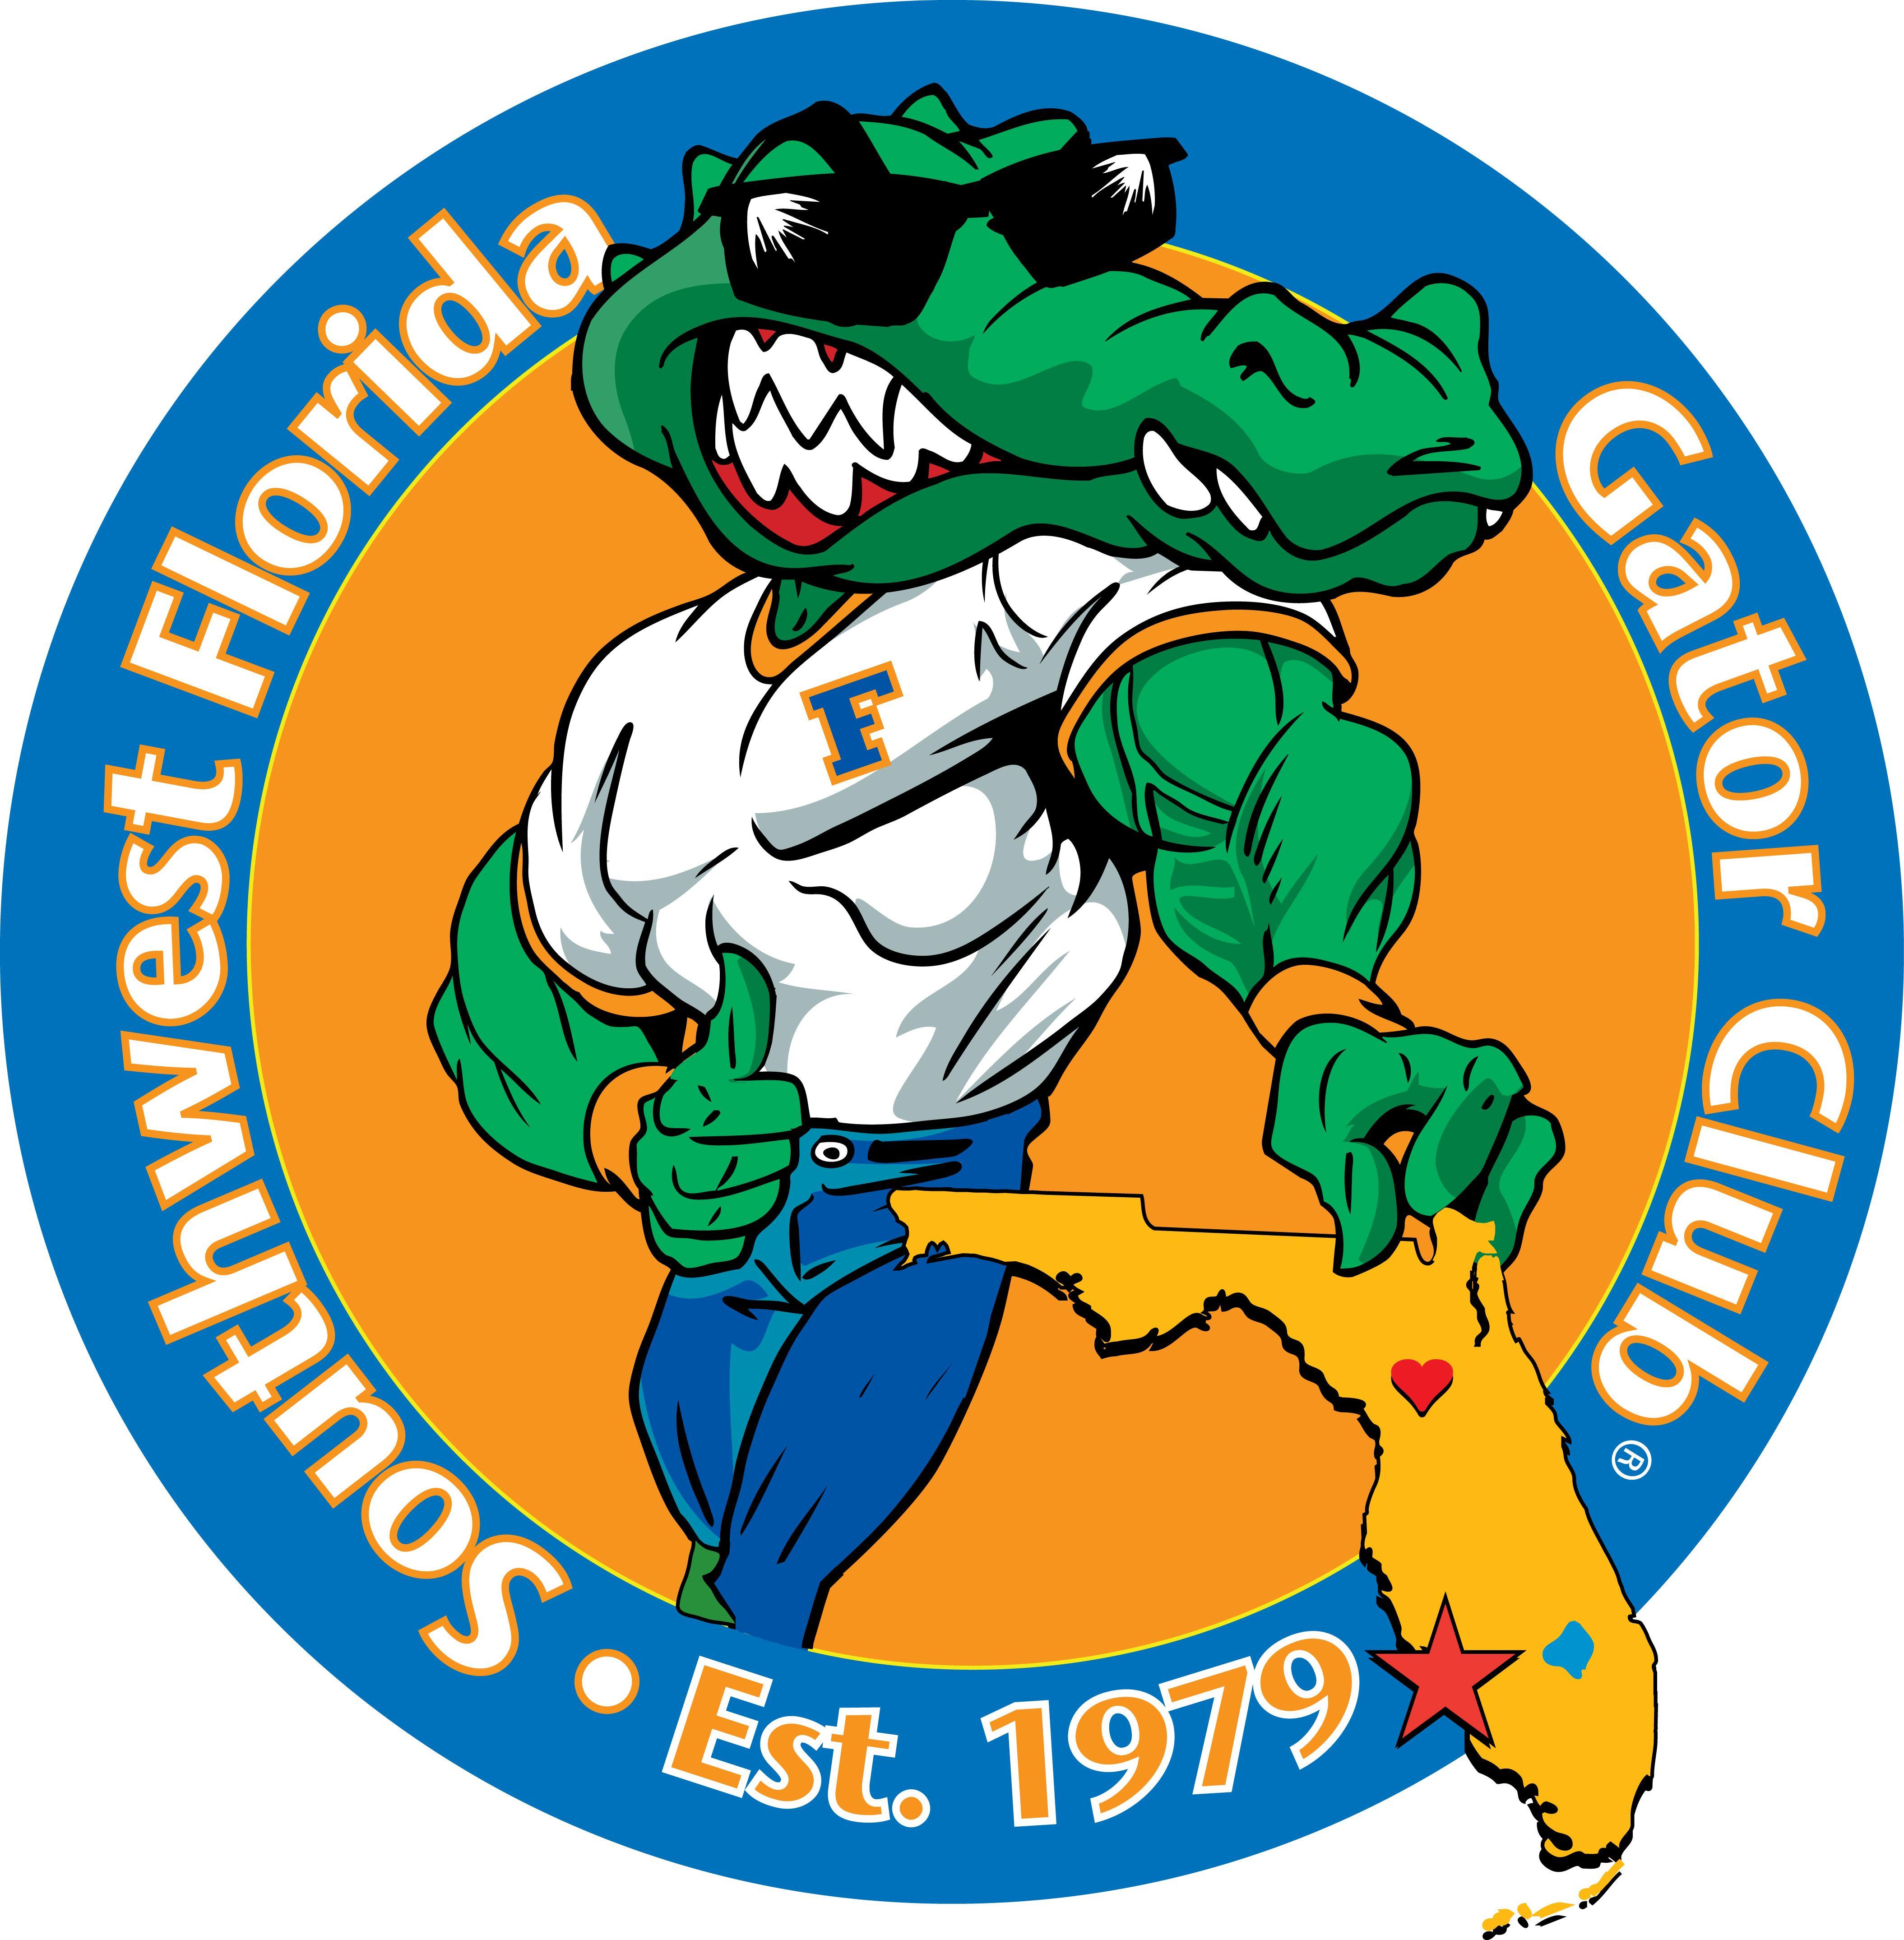 Fla Gators Logo - October | 2010 | Crownechronicles's Blog